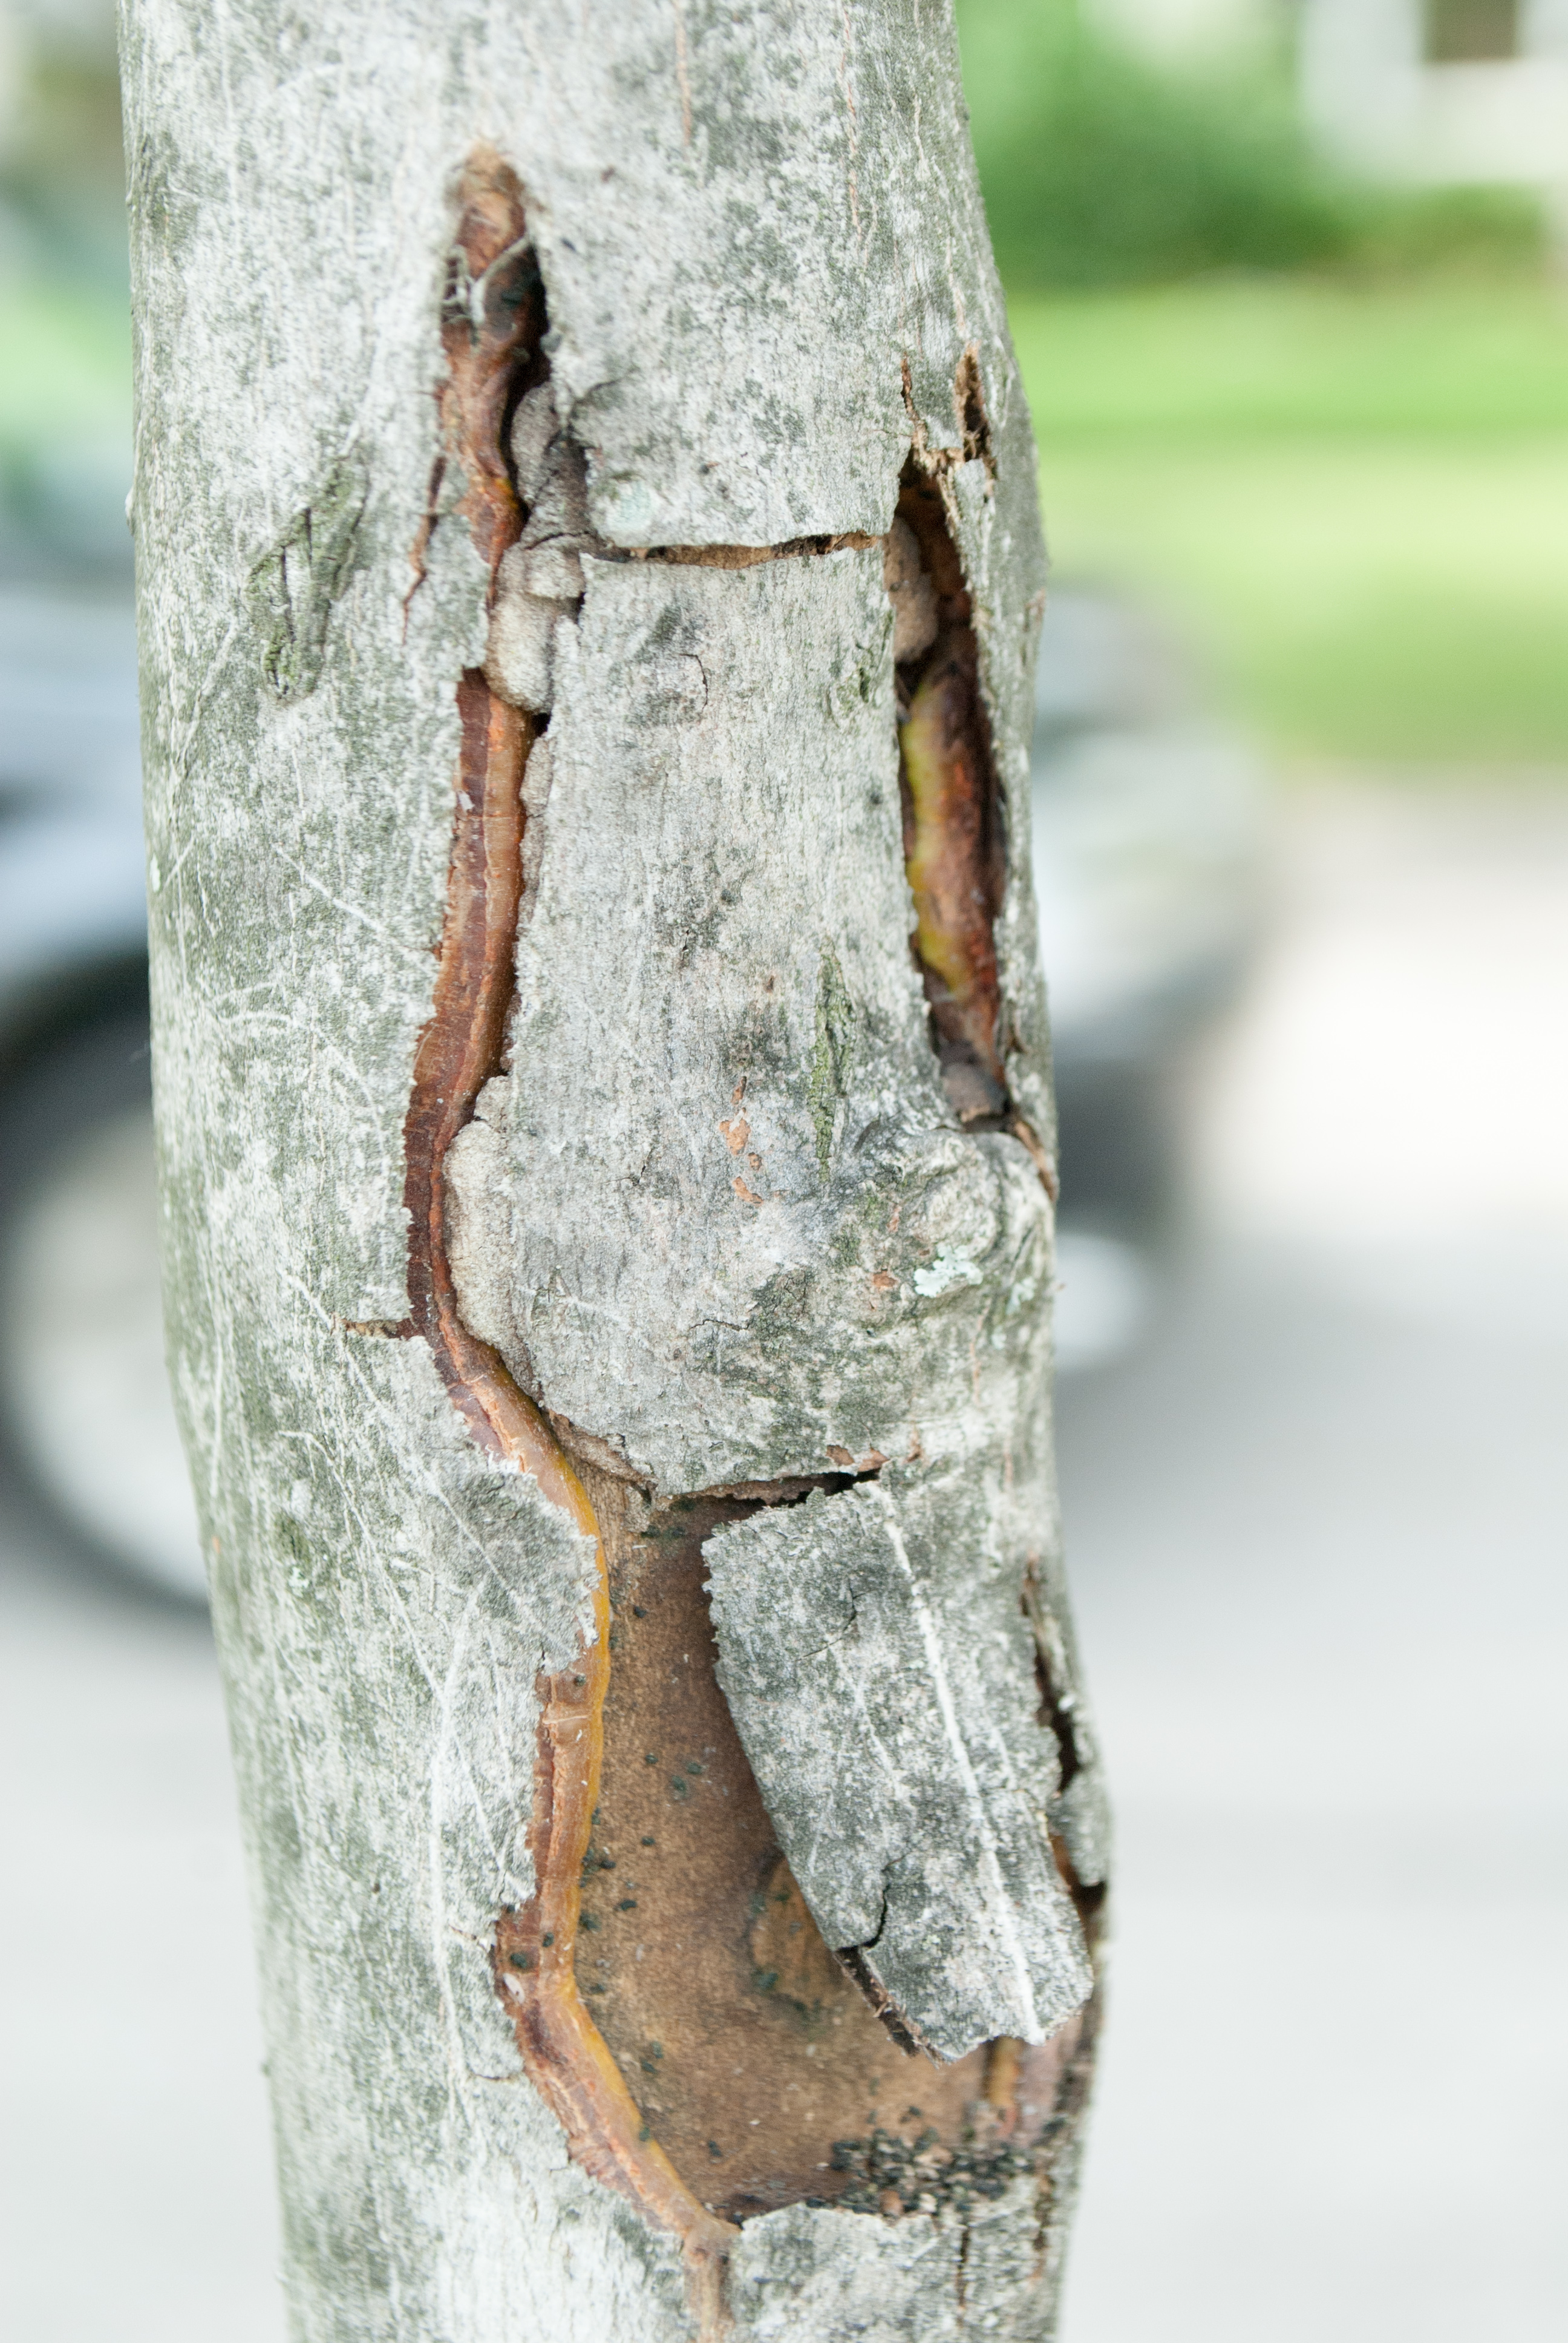 Peeling Tree Bark: Diseases & Other Causes of Bark Shedding